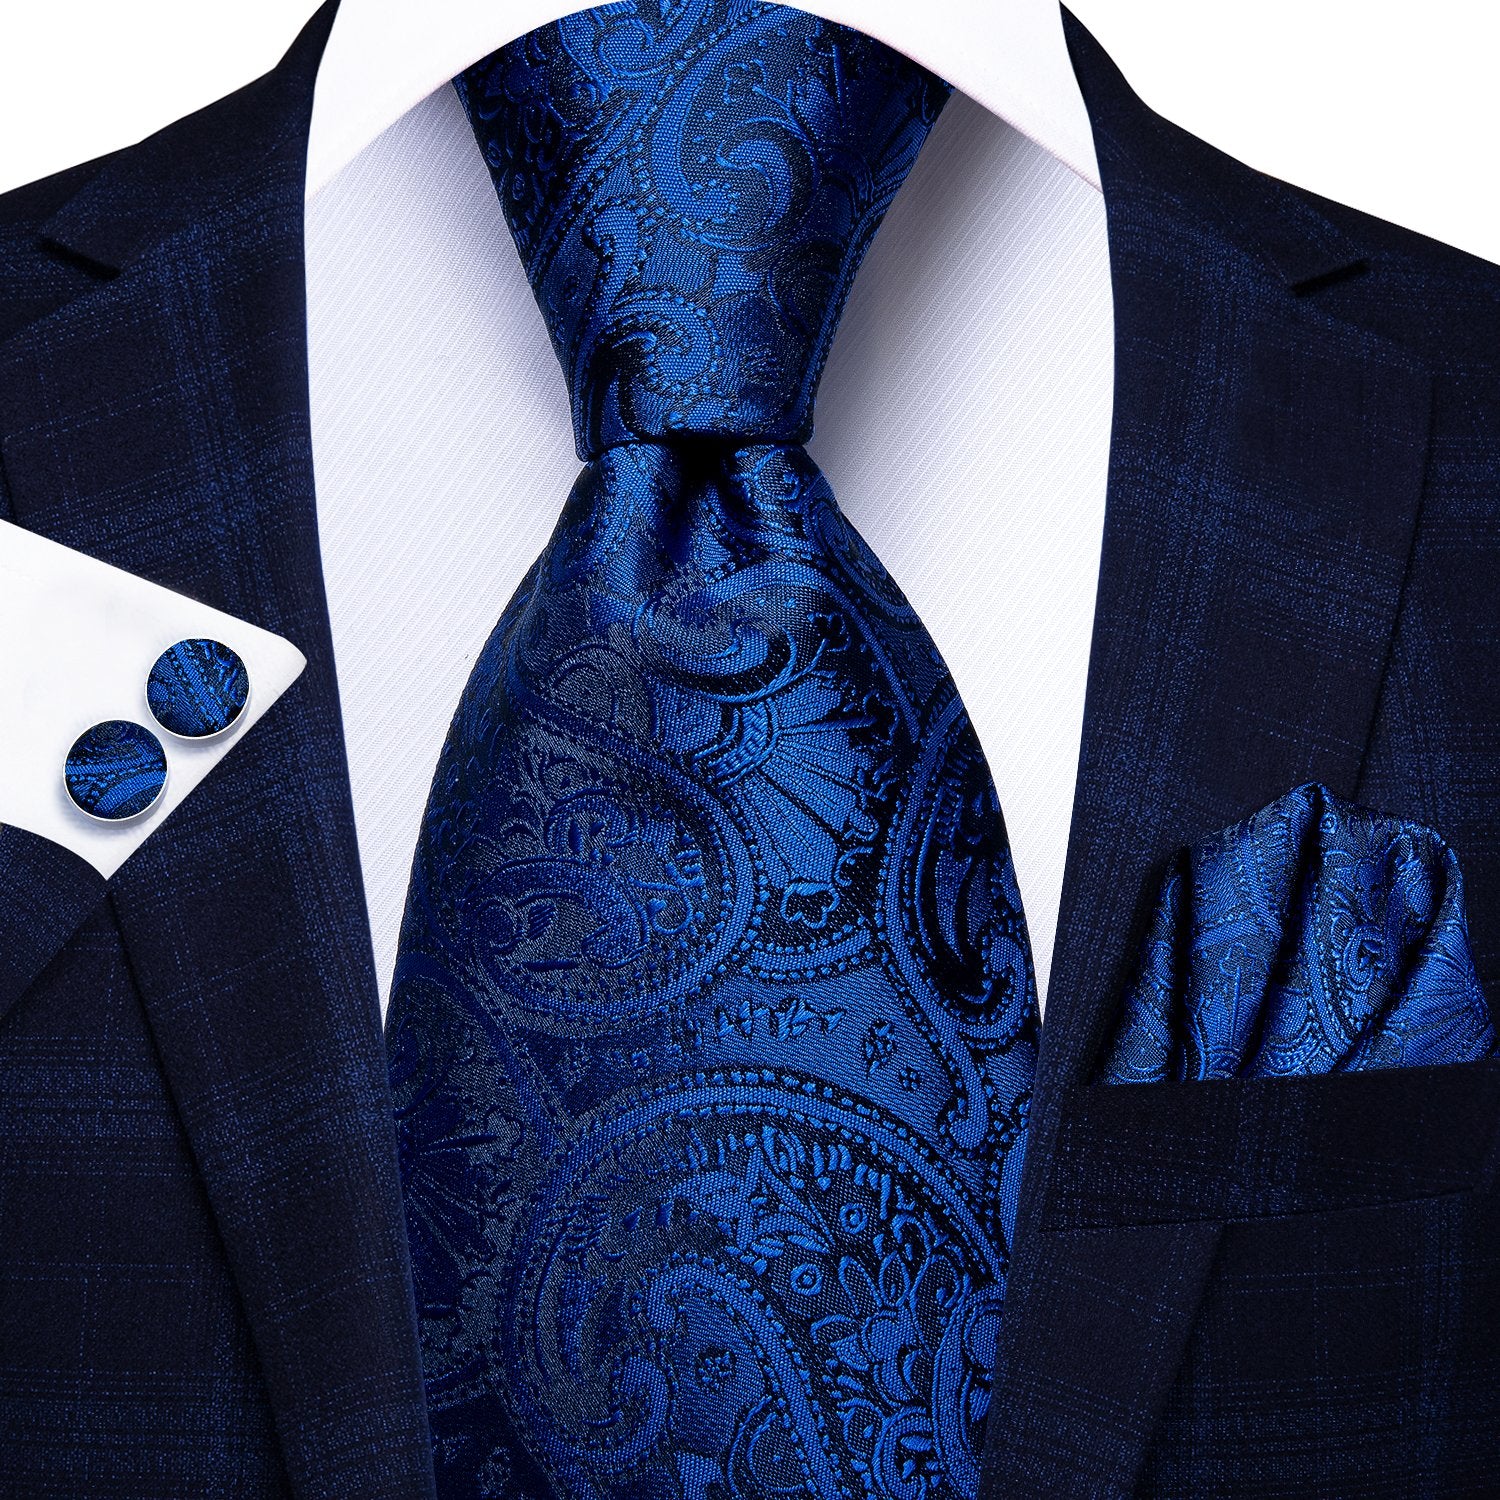 Fanstastic Blue Paisley Tie Handkerchief Cufflinks Set with Wedding Brooch